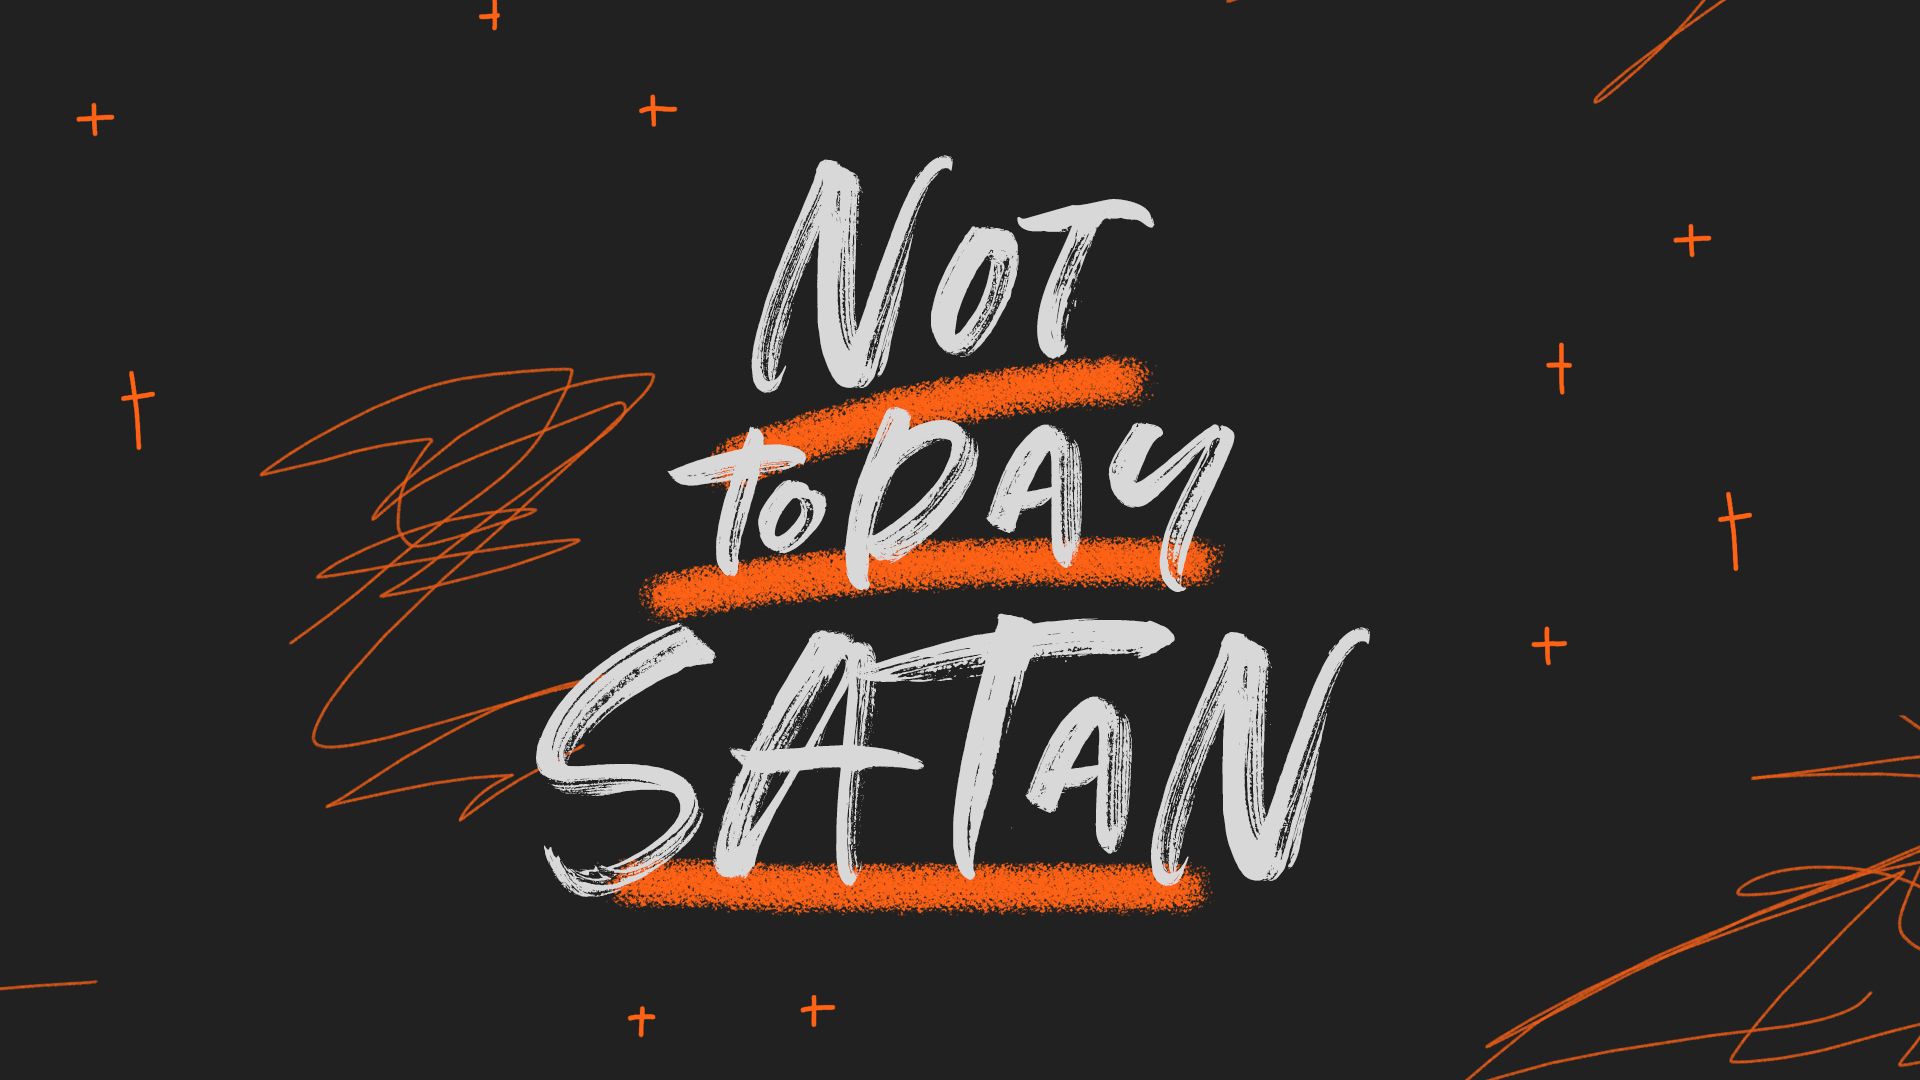 Not Today Satan Wallpapers